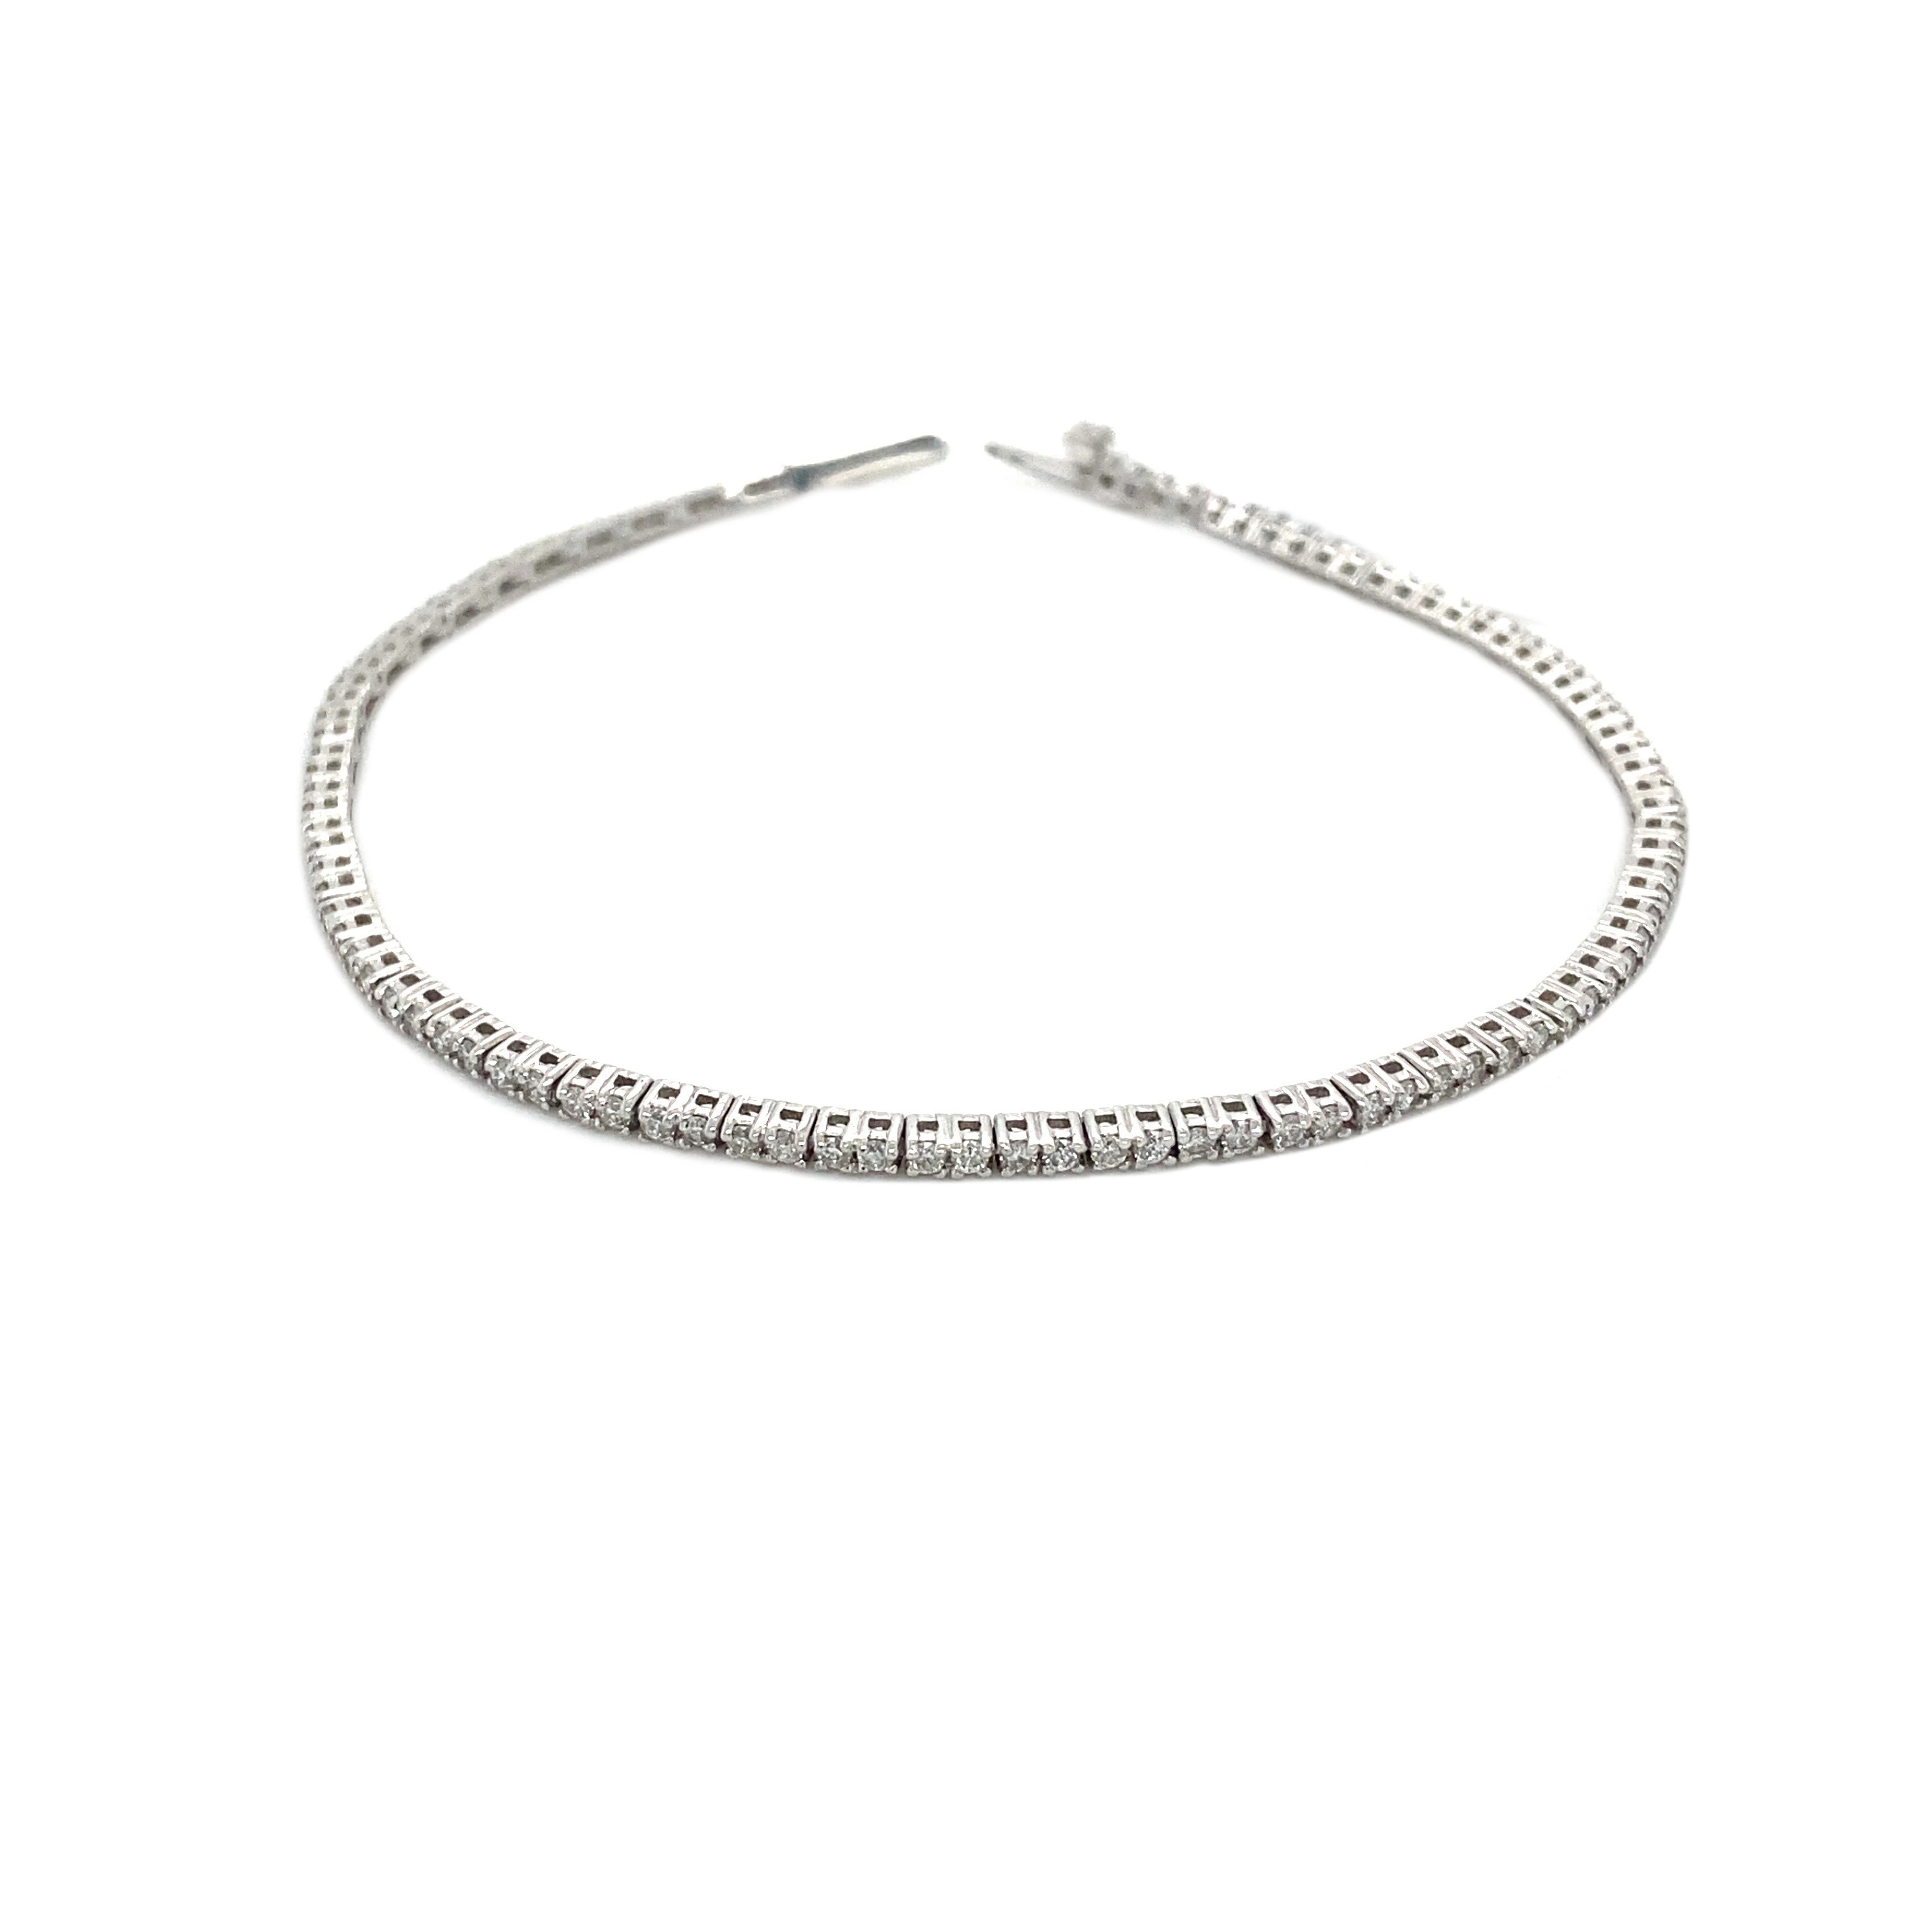 1.13 Carat Diamond Tennis Bracelet